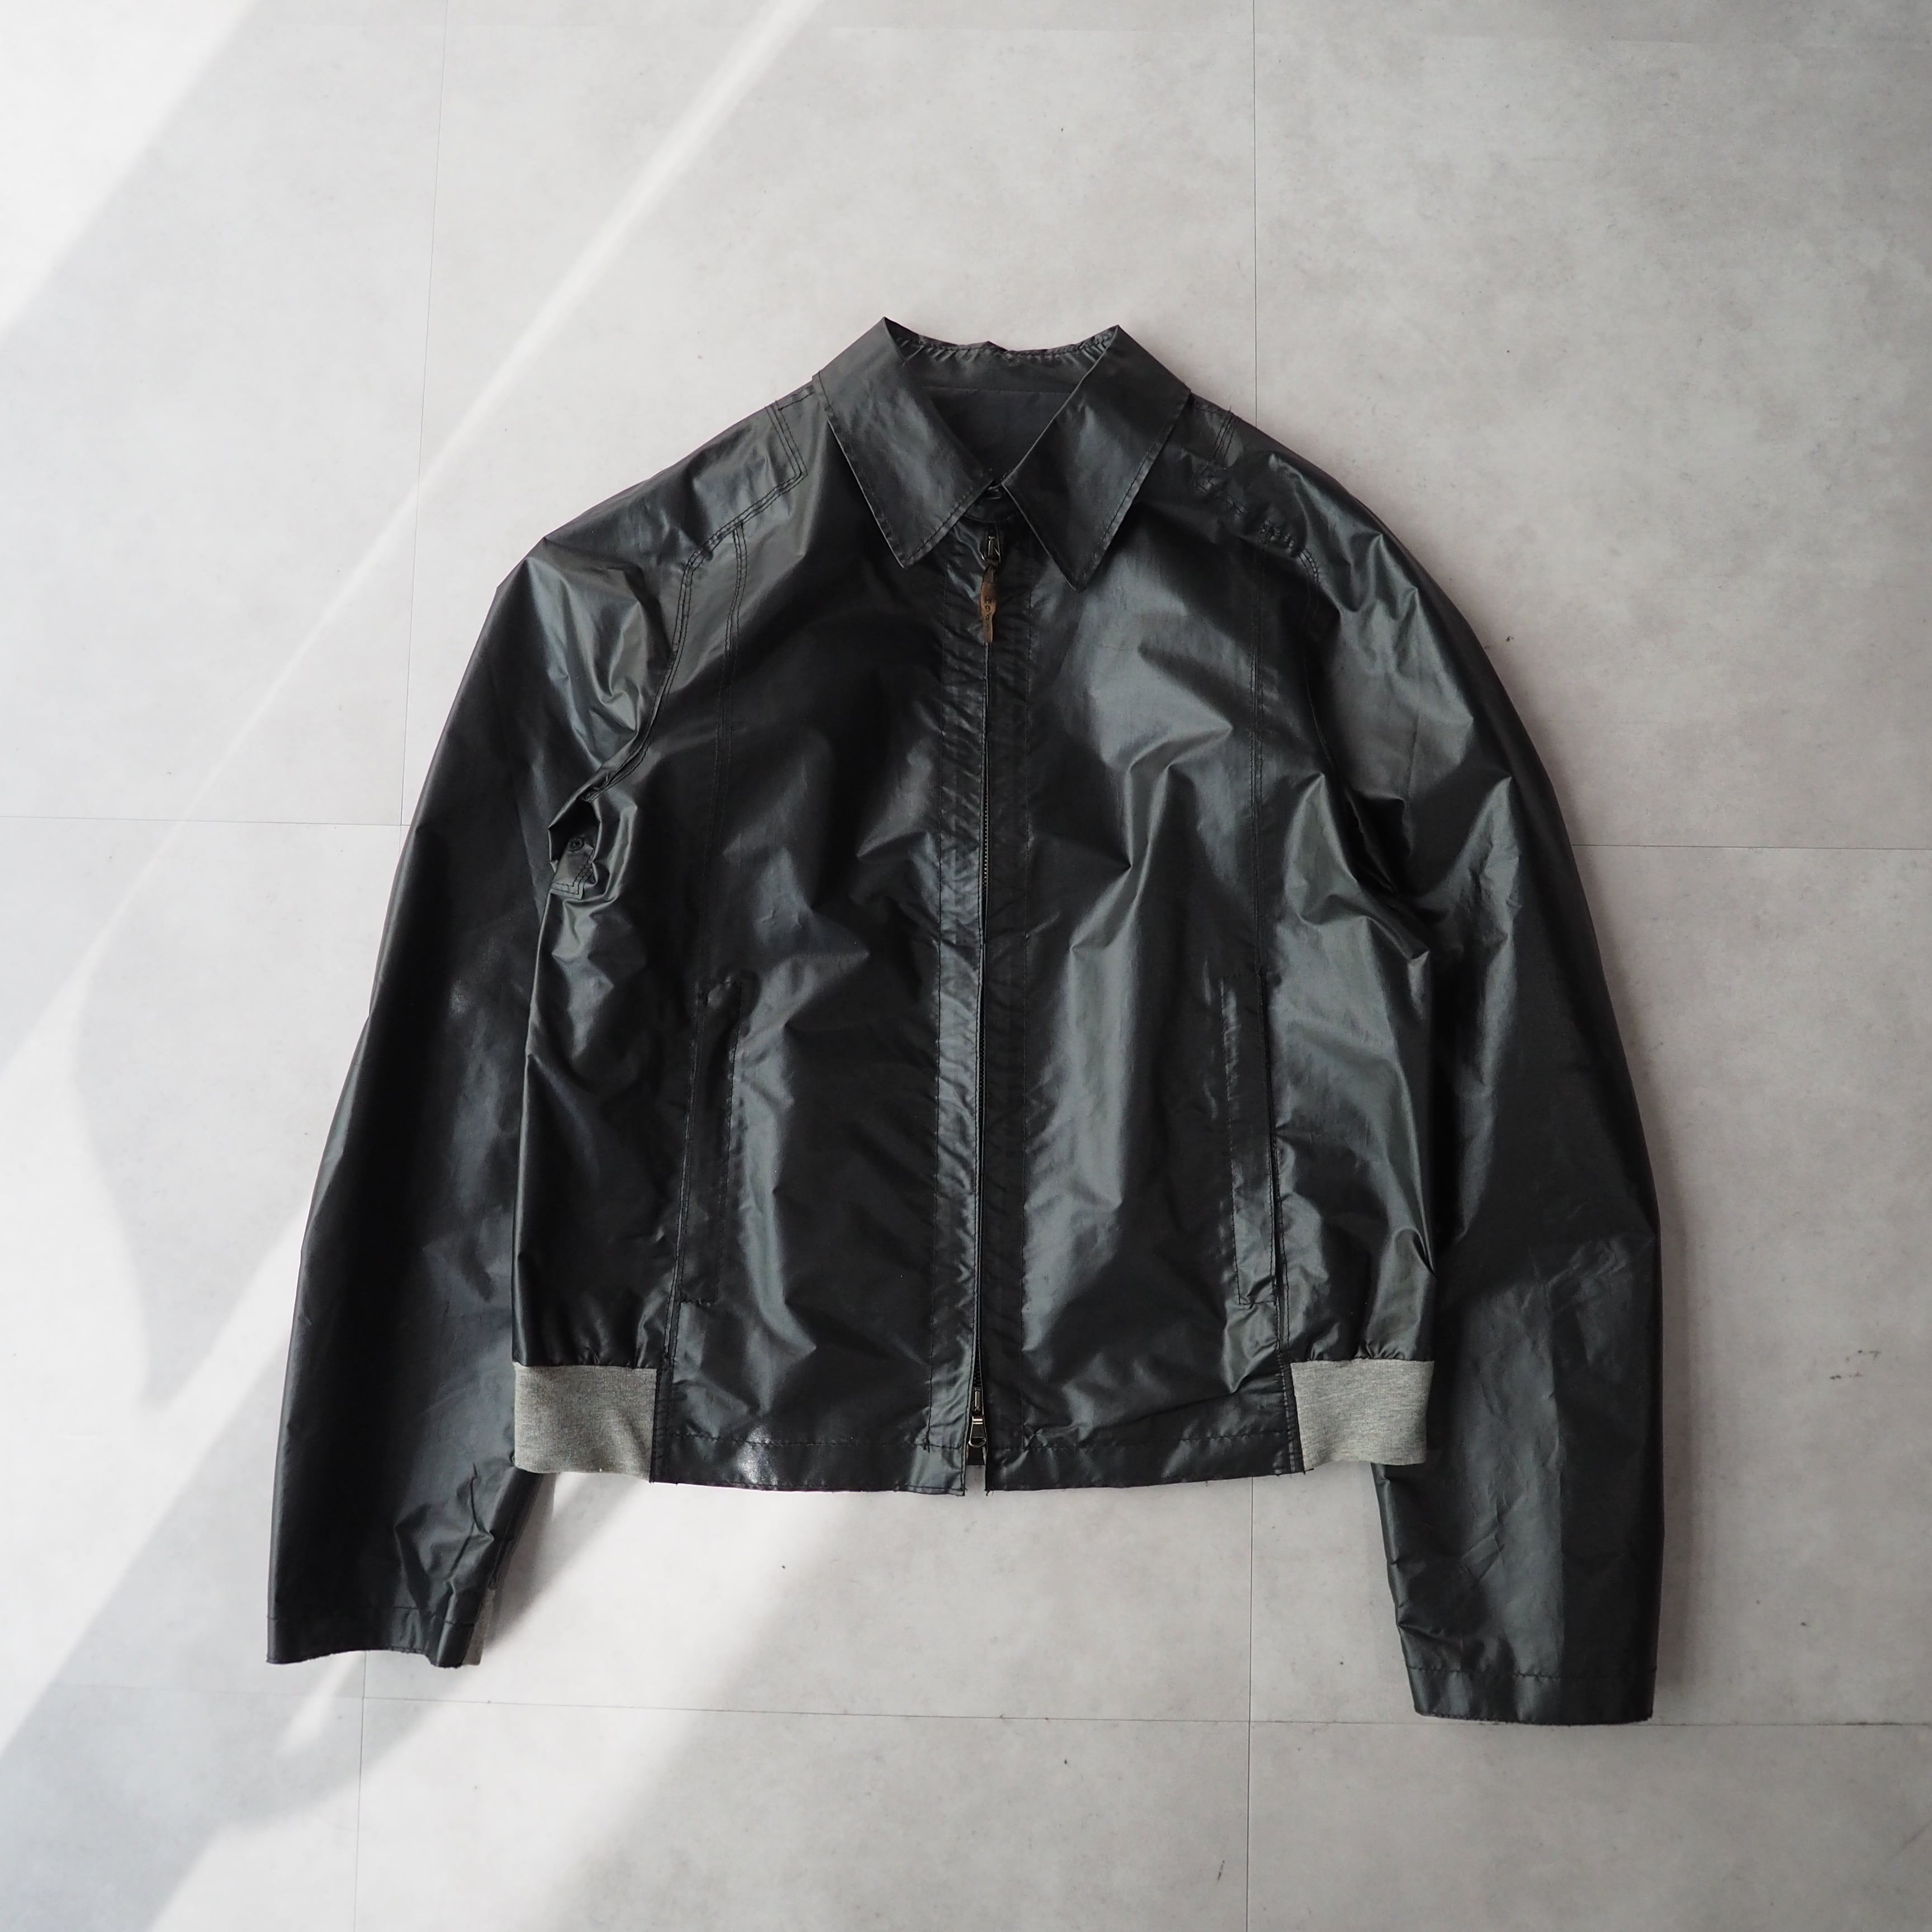 H948 by HERNO black nylon jacket アッカ948 ヘルノ ブラック 